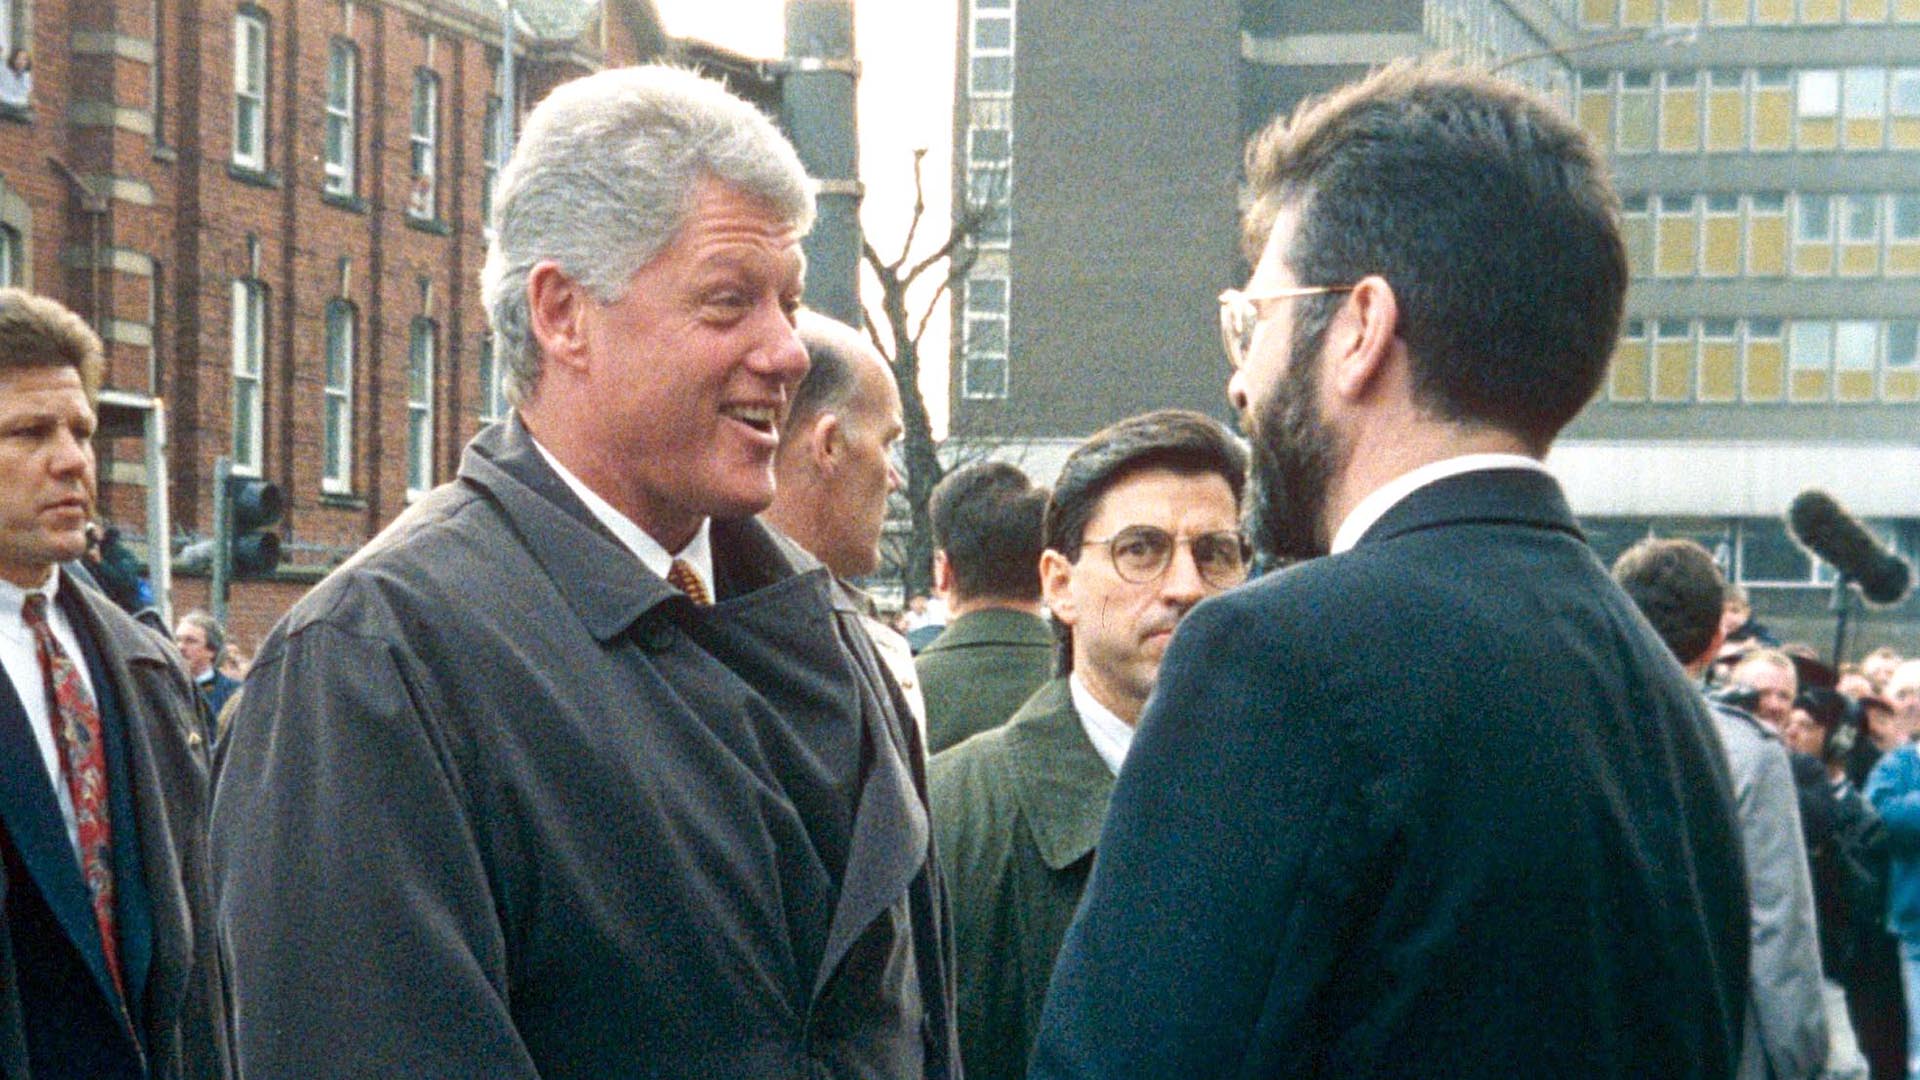 Bill Clinton and Gerry Adams shake hands in Belfast, November 1995